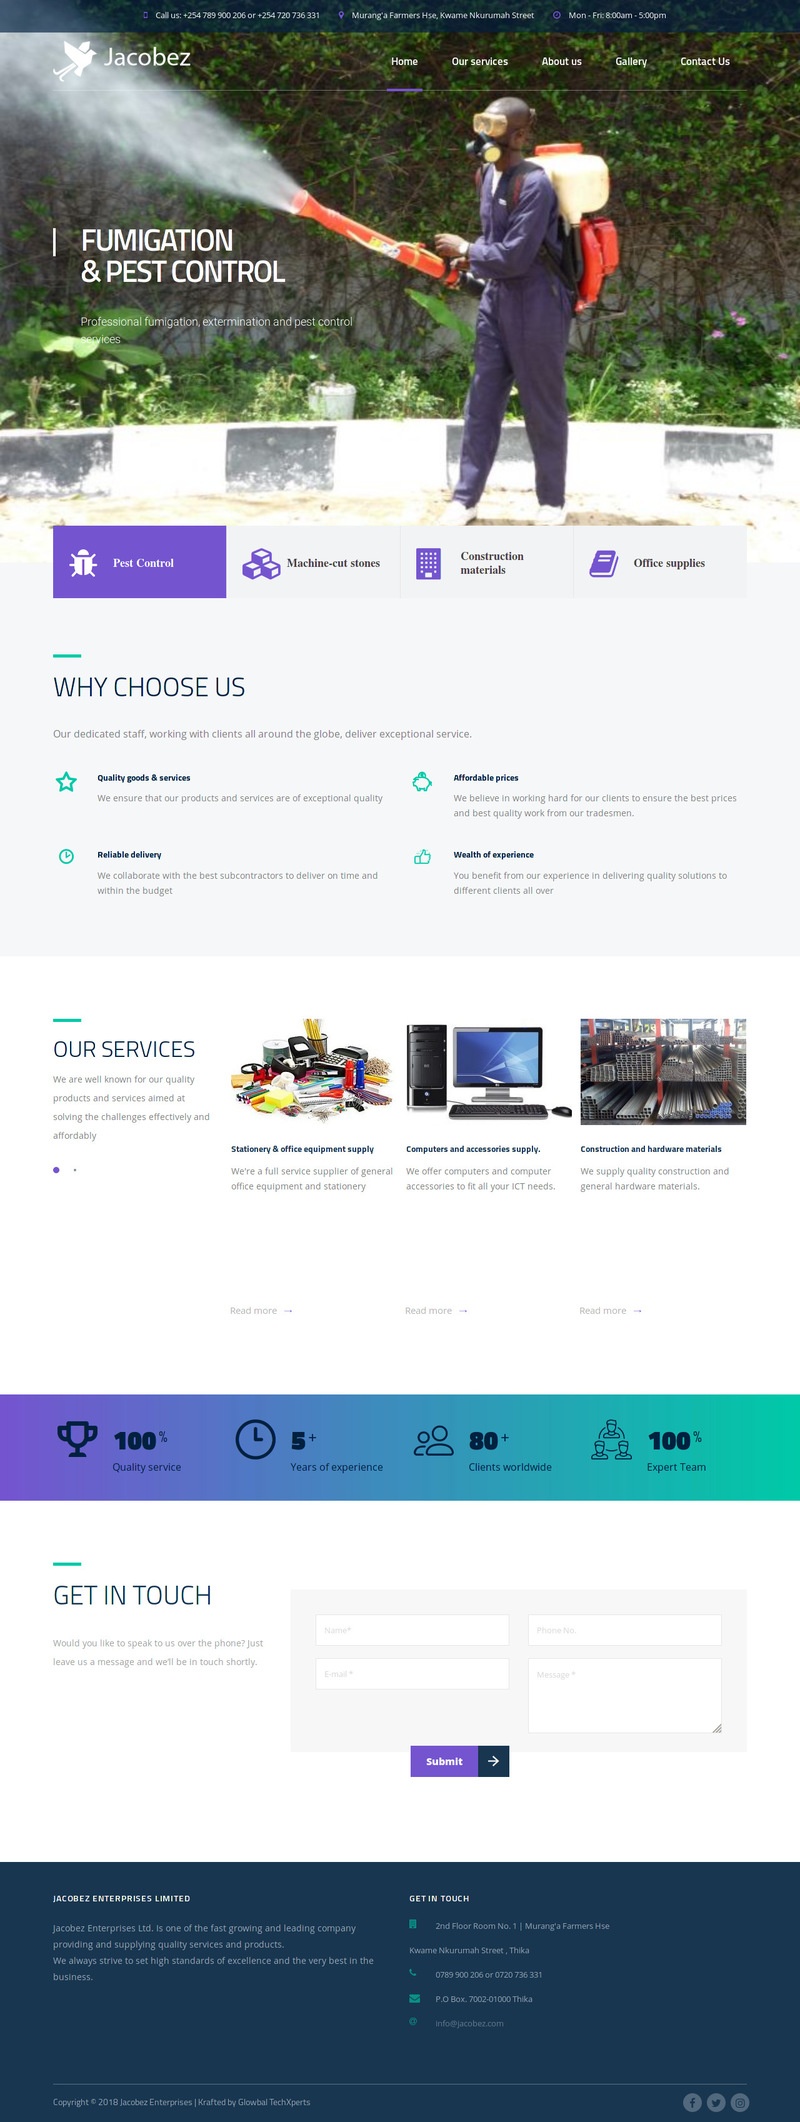 Jacobez enterprises website homepage